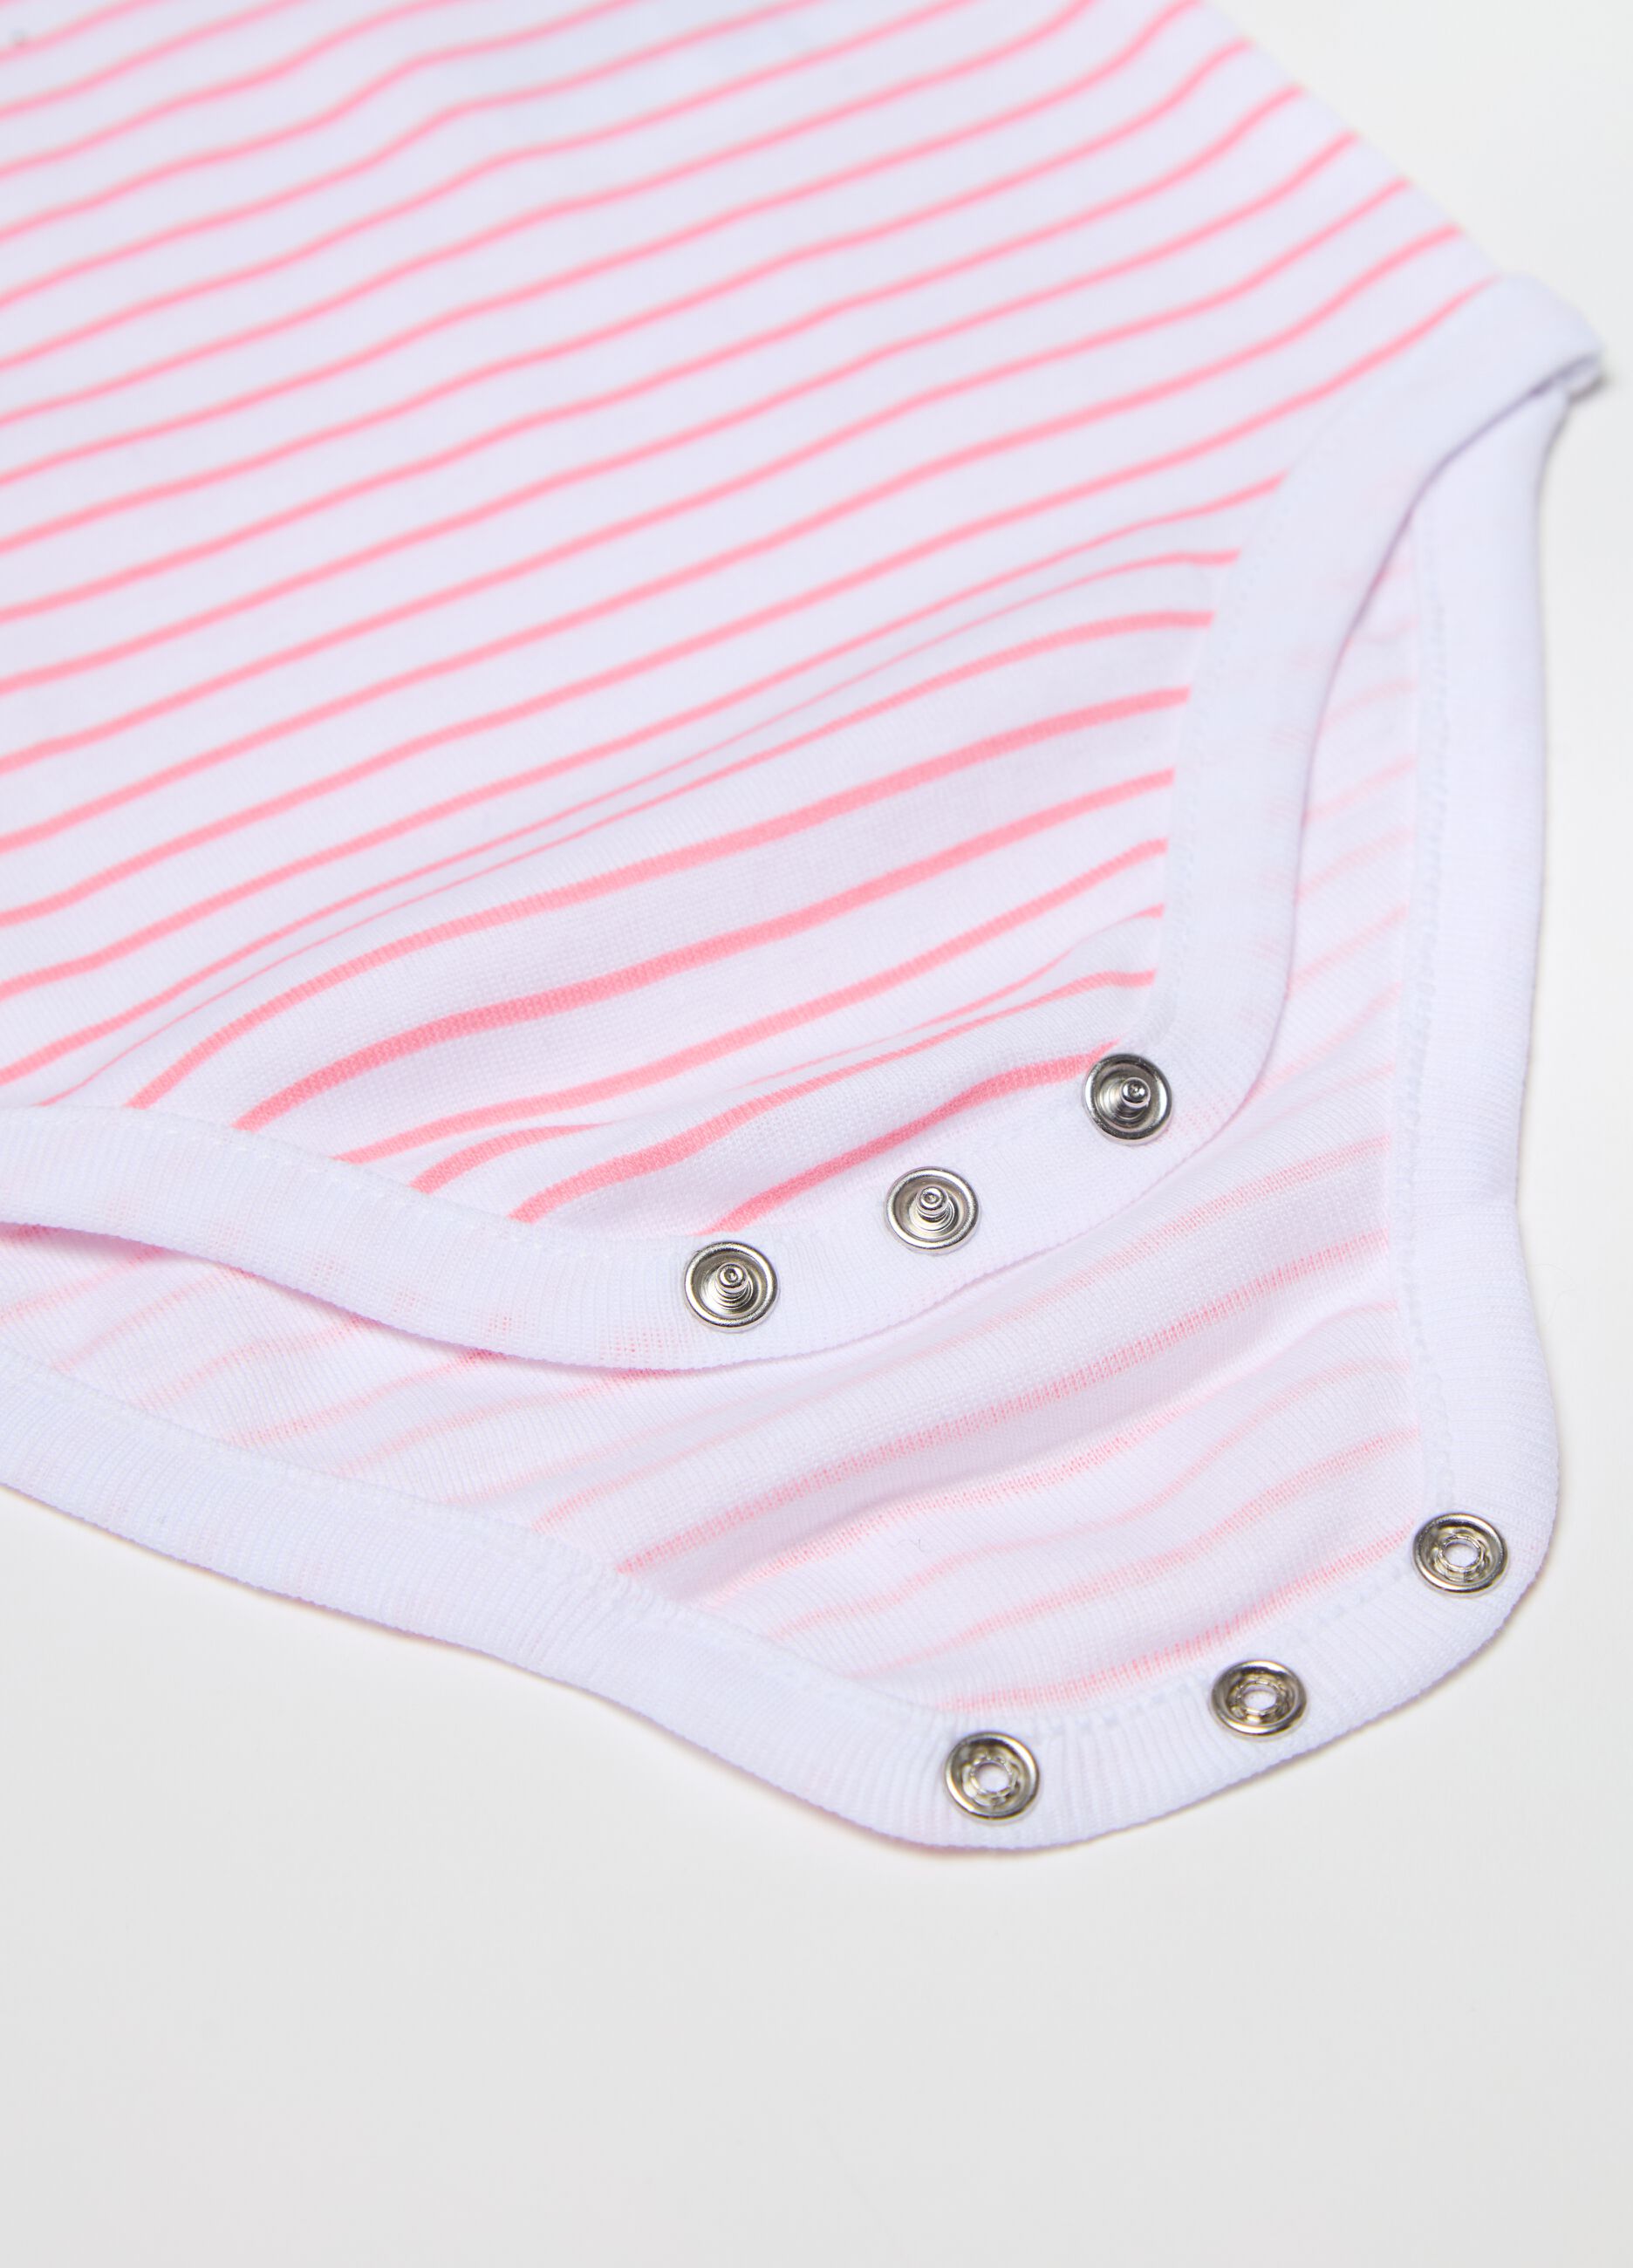 Three-pack sleeveless bodysuits in organic cotton